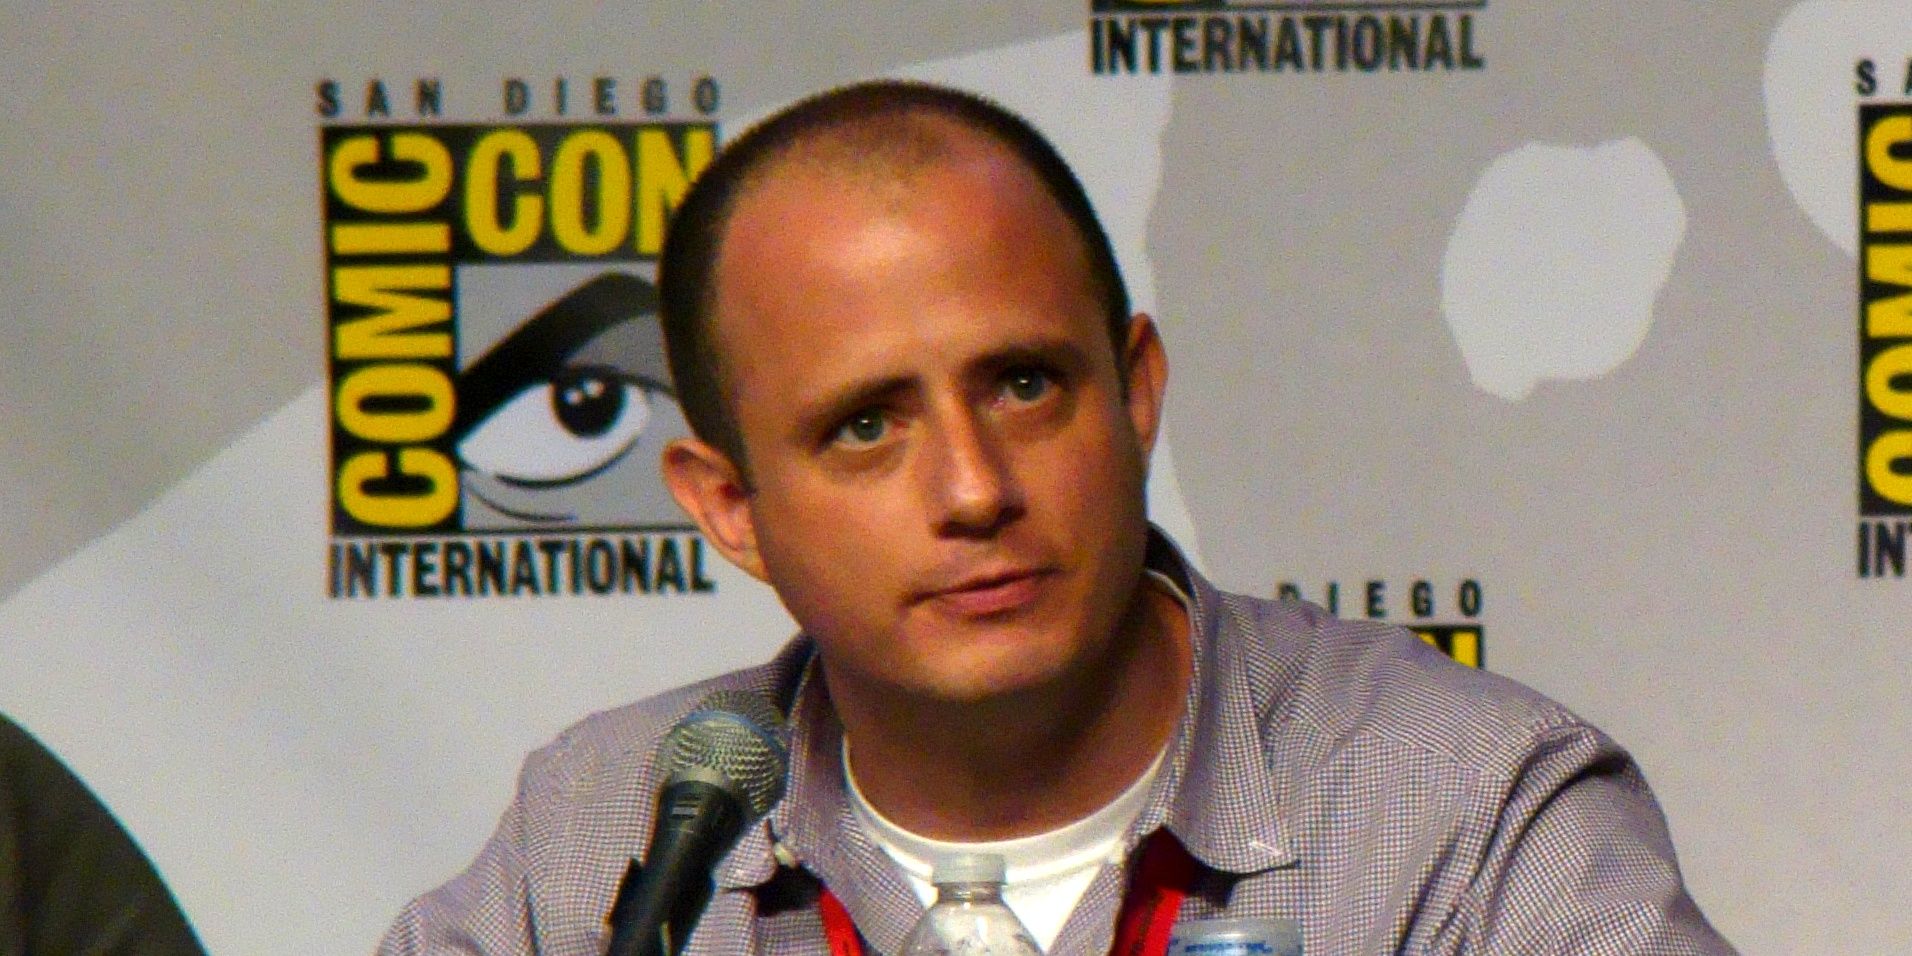 Eric Kripke, Co-Creator of The Boys